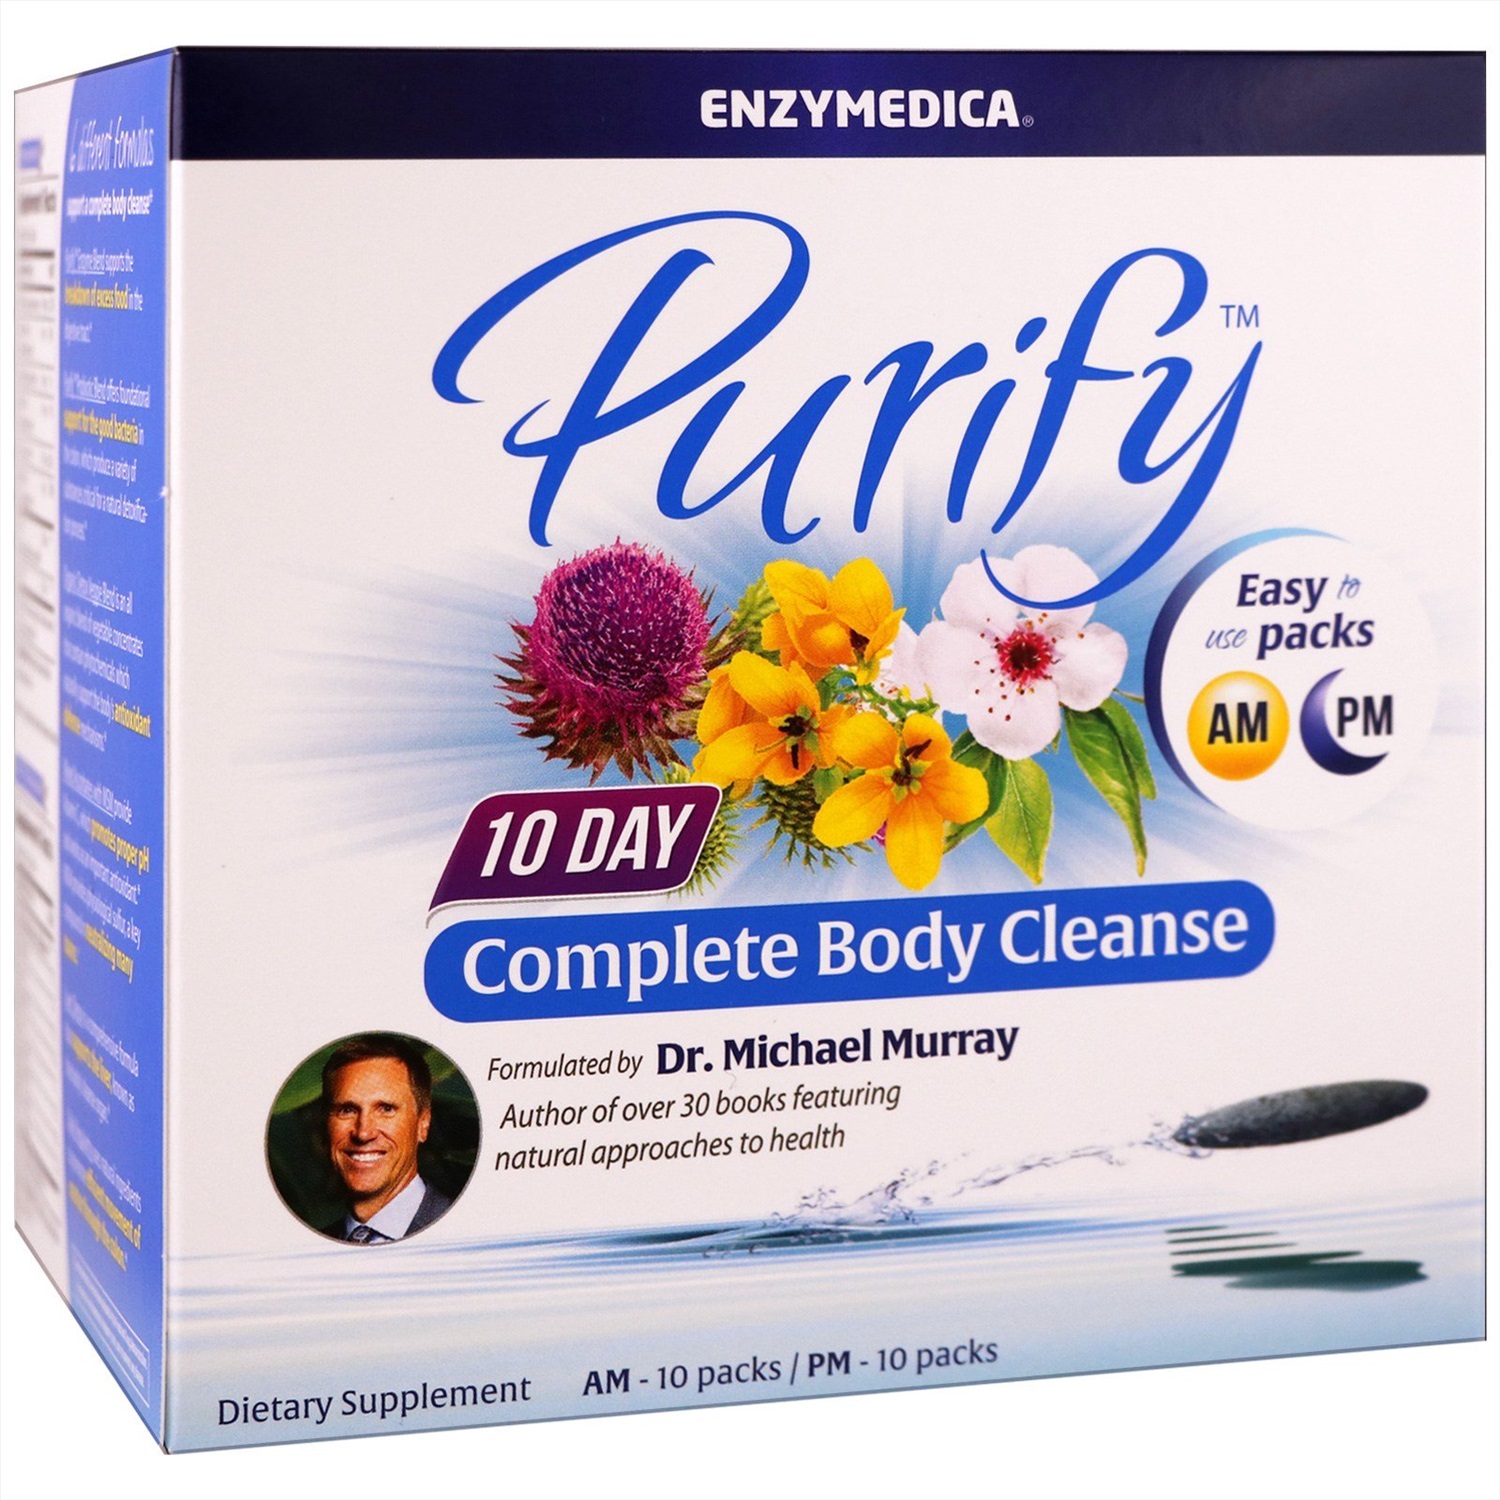 Body cleanse. Enzymedica Purify. Очистка организма синий пакетик. Энзимедика детям. Enzymedica BEANASSIST.